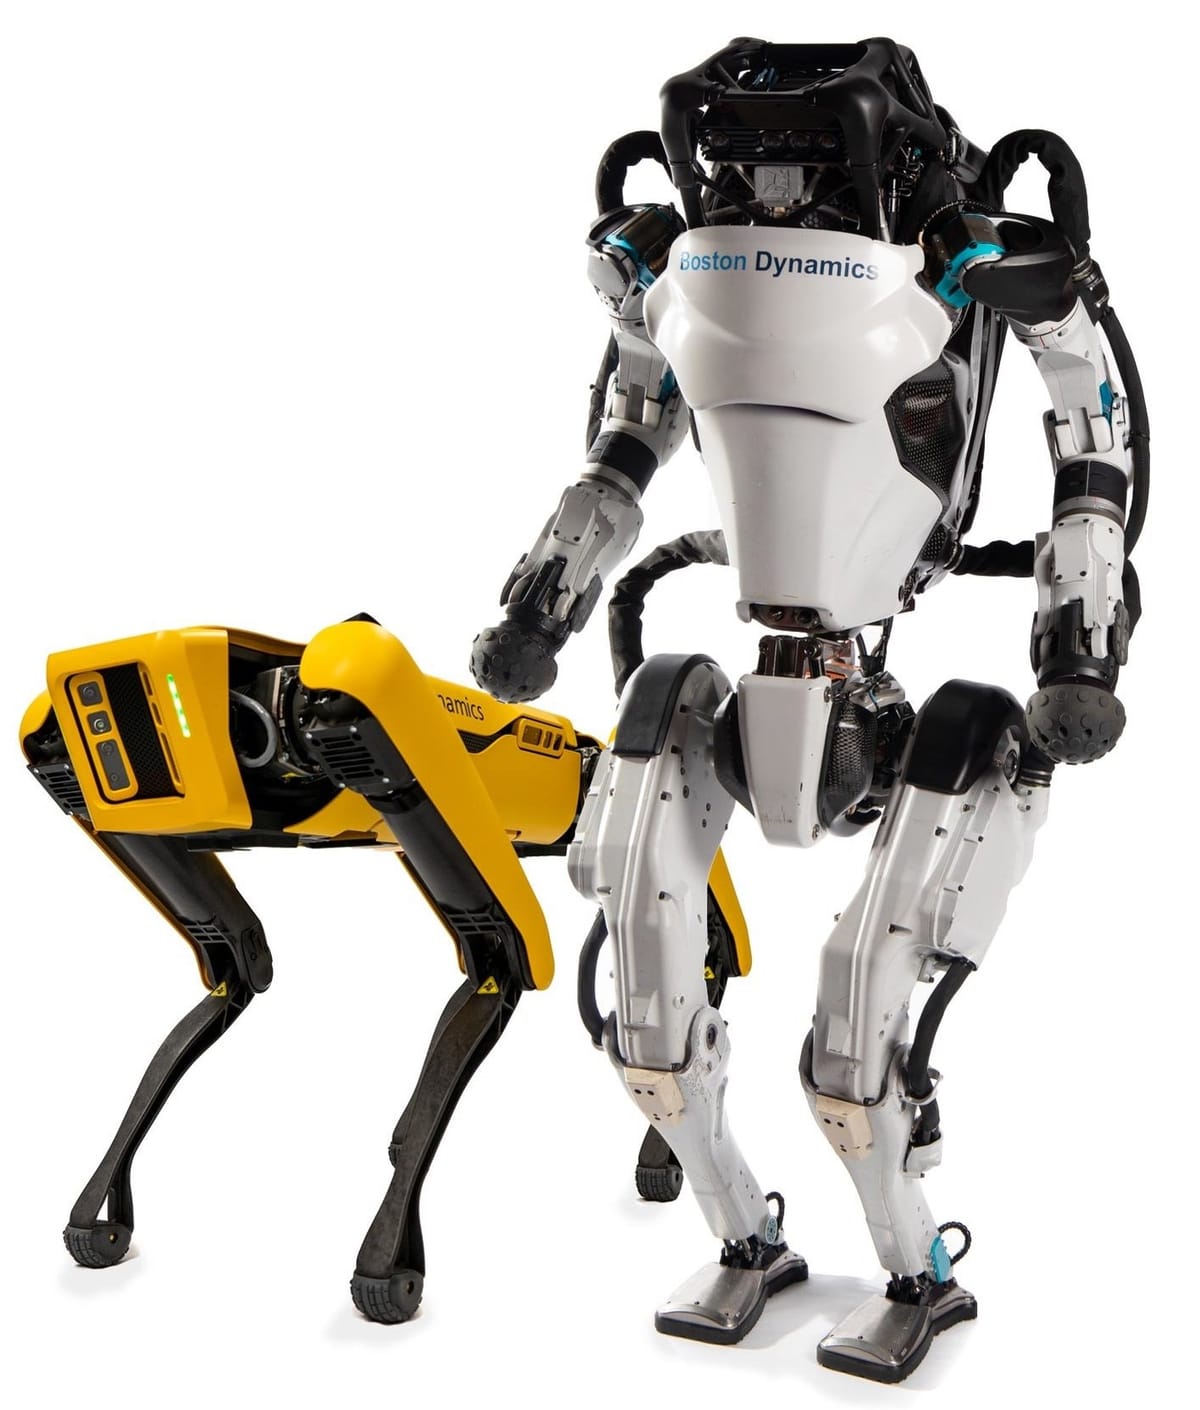 GPK-32 Tracked Inspection Robot: Revolutionizing Safety in Hazardous Environments